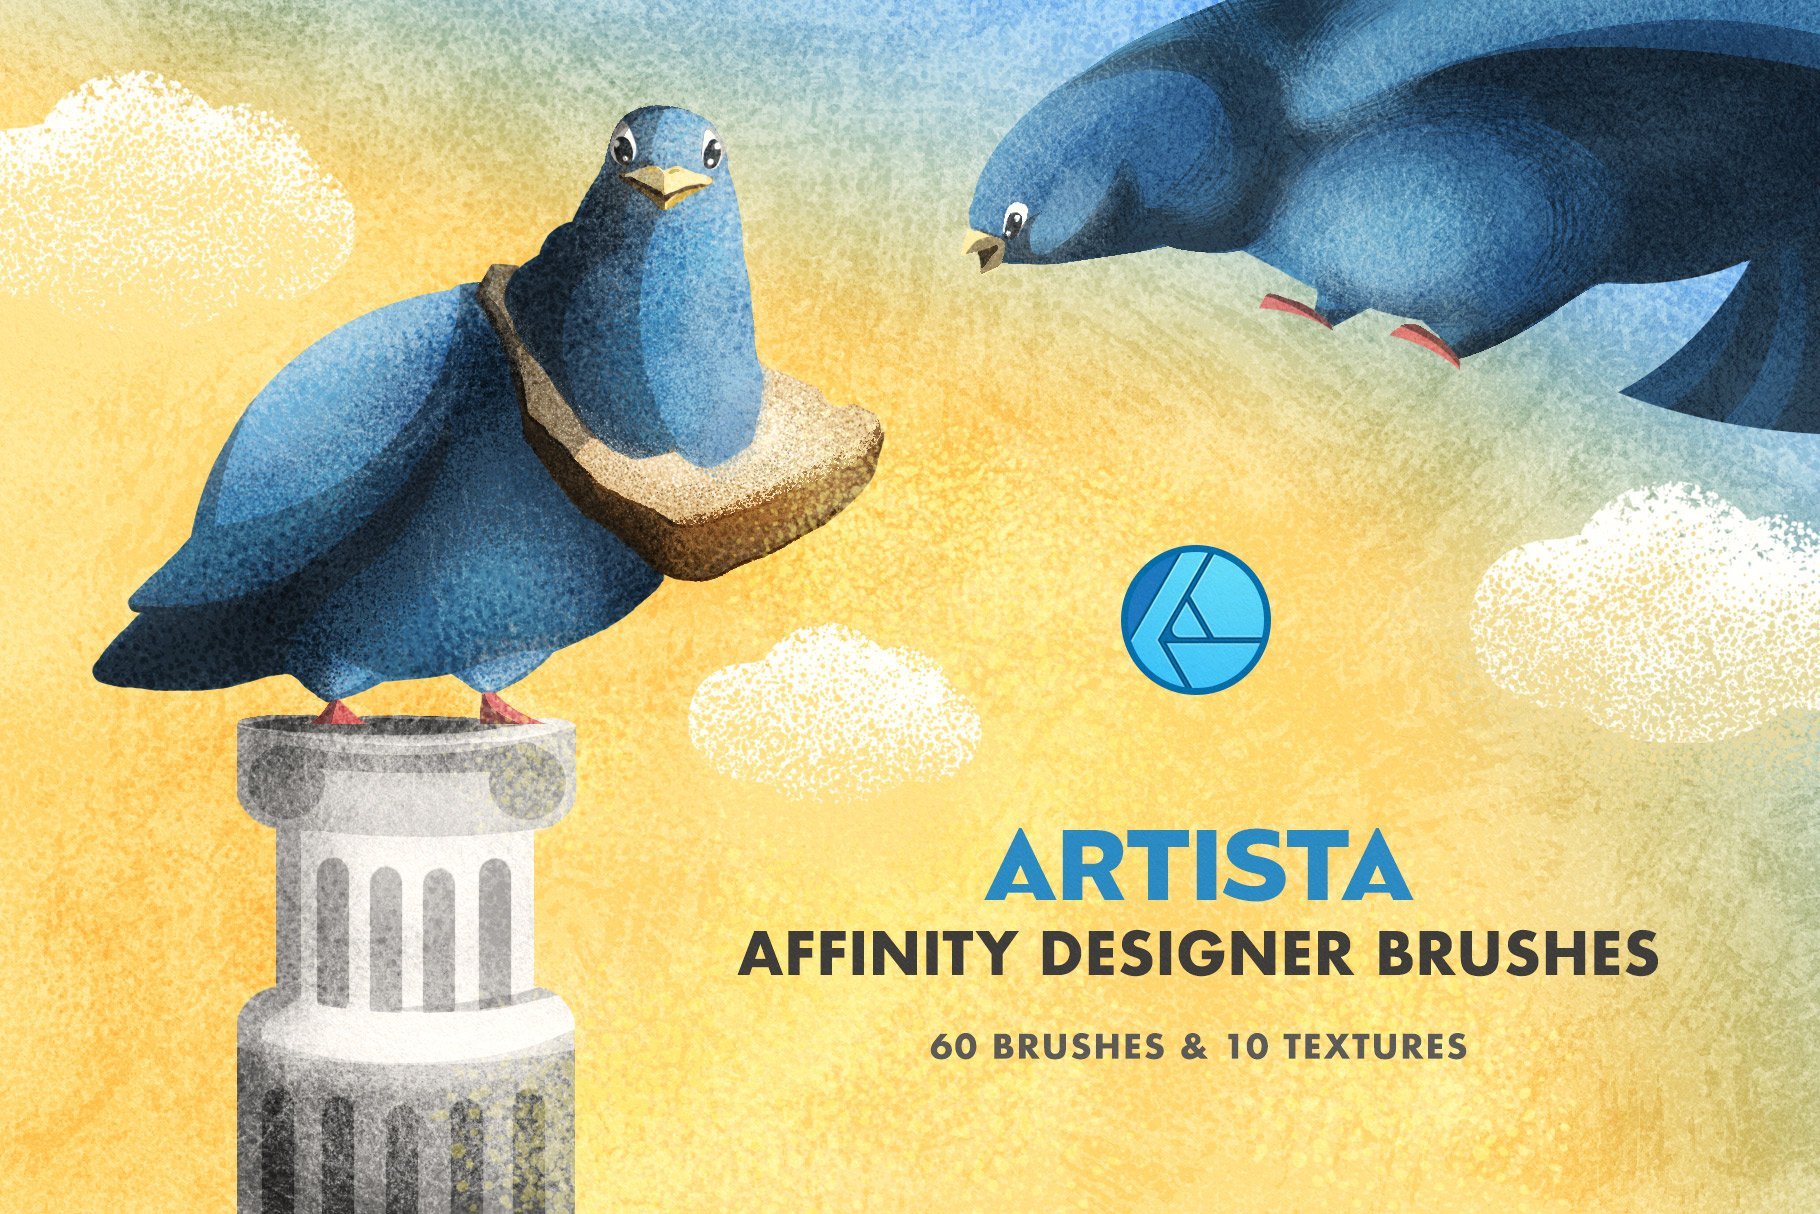 Show More Artista Affinity Designer Brushes